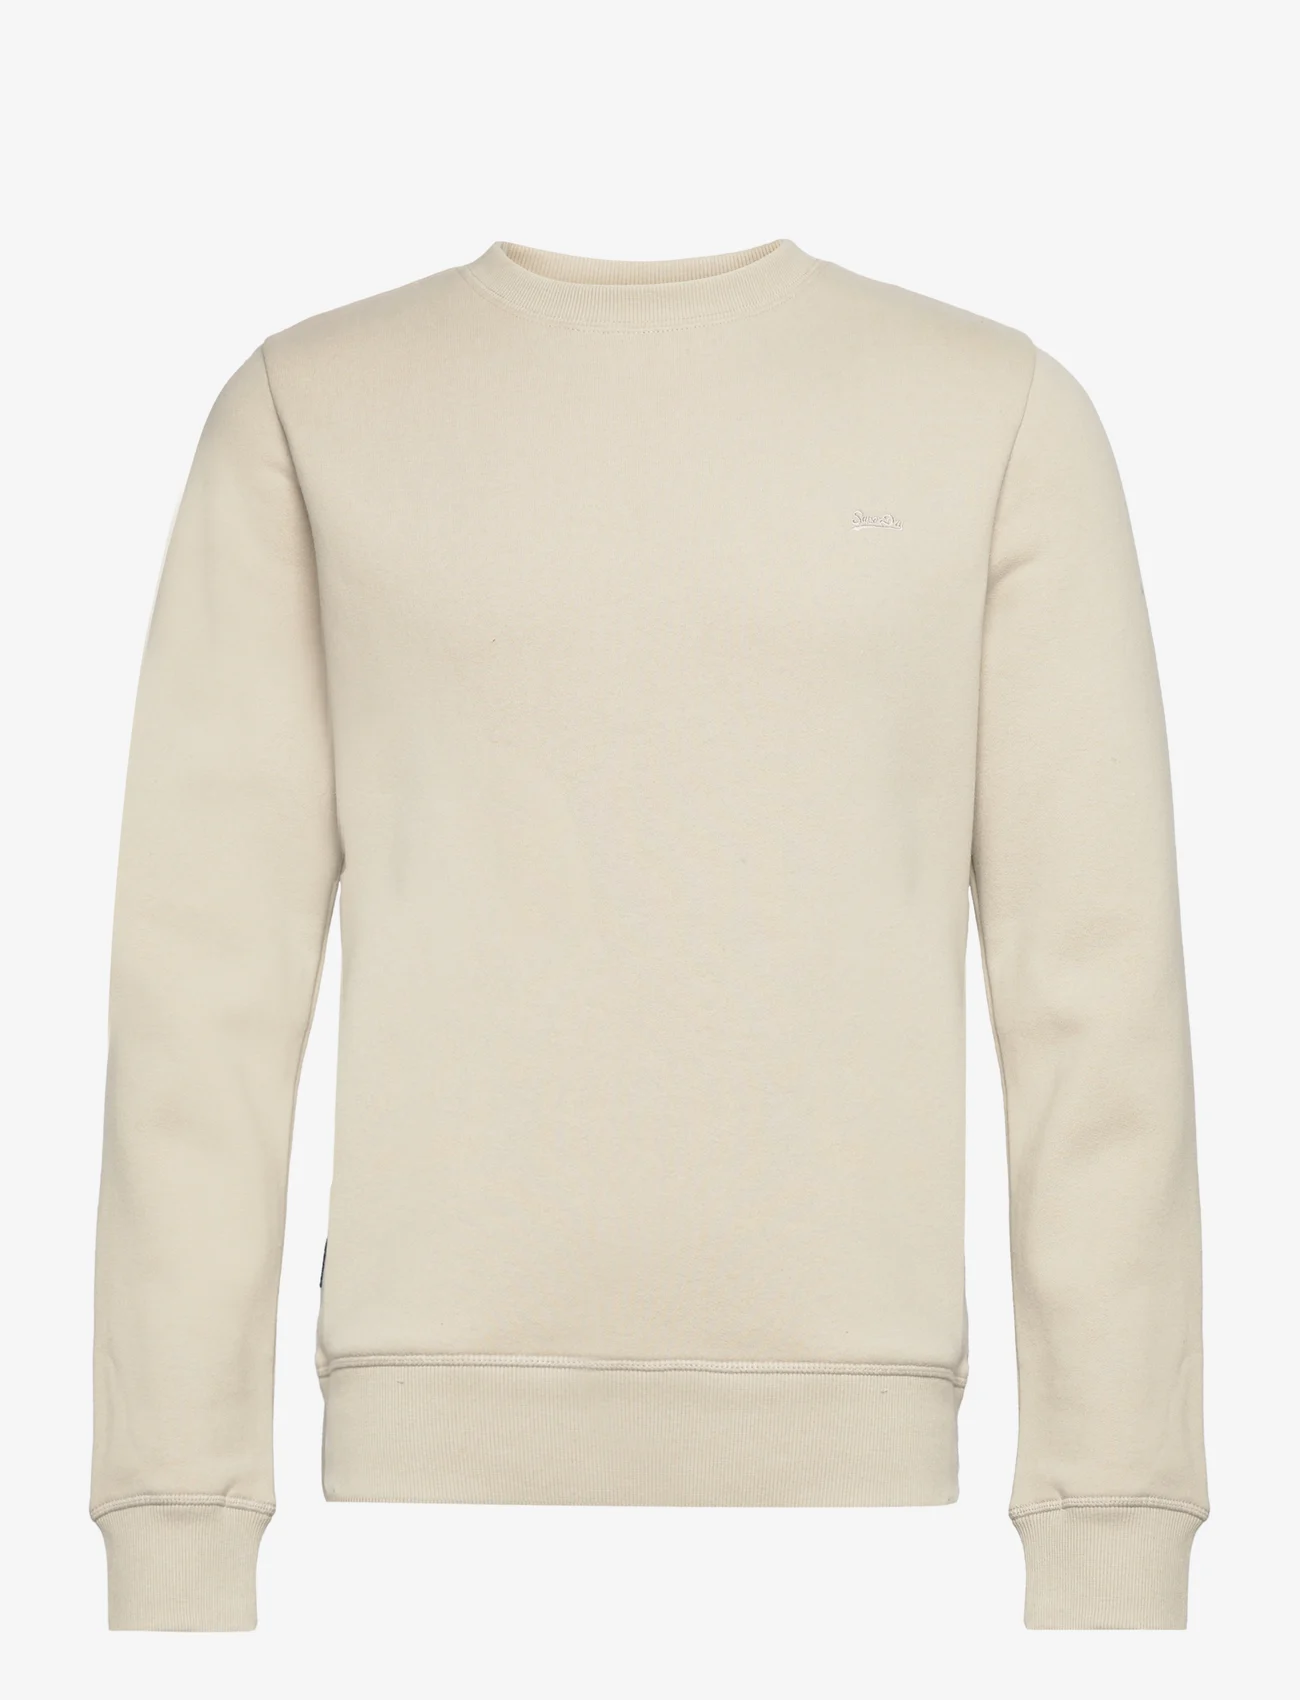 Superdry - ESSENTIAL LOGO CREW SWEATSHIRT - sweatshirts - light stone beige - 0